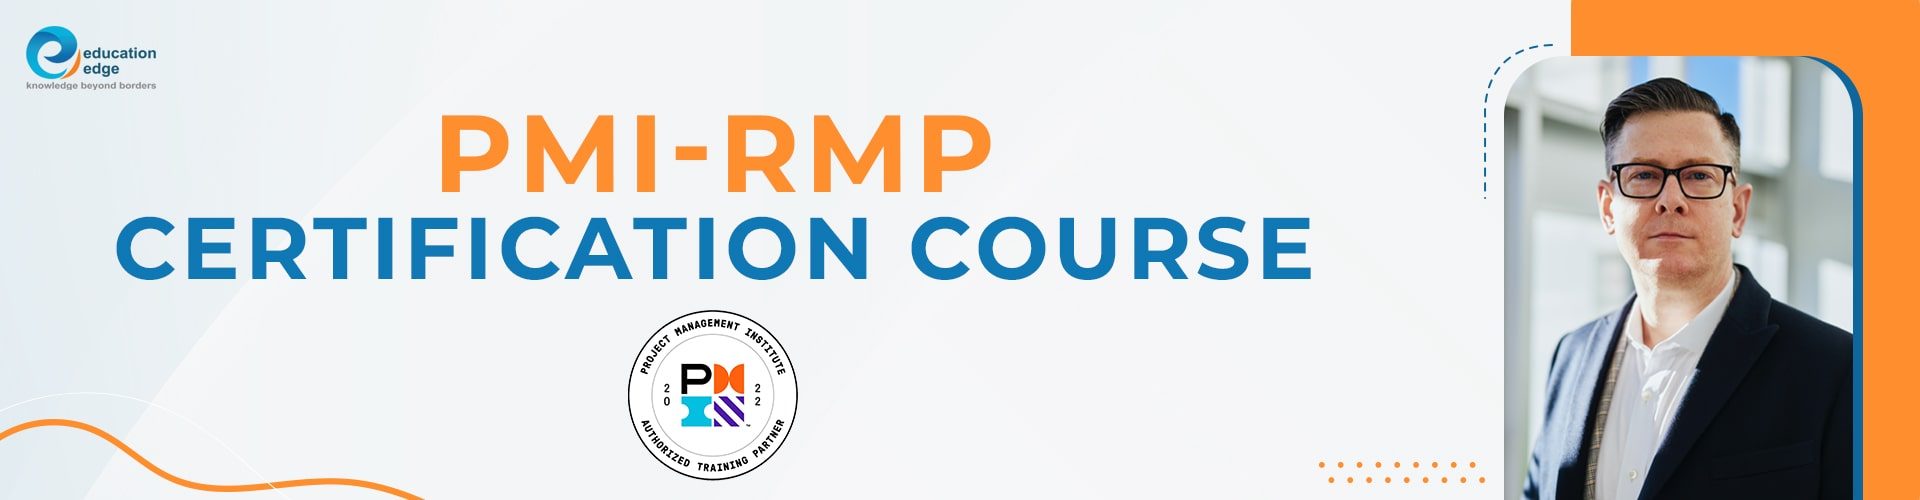 PMI-RMP Certification Course